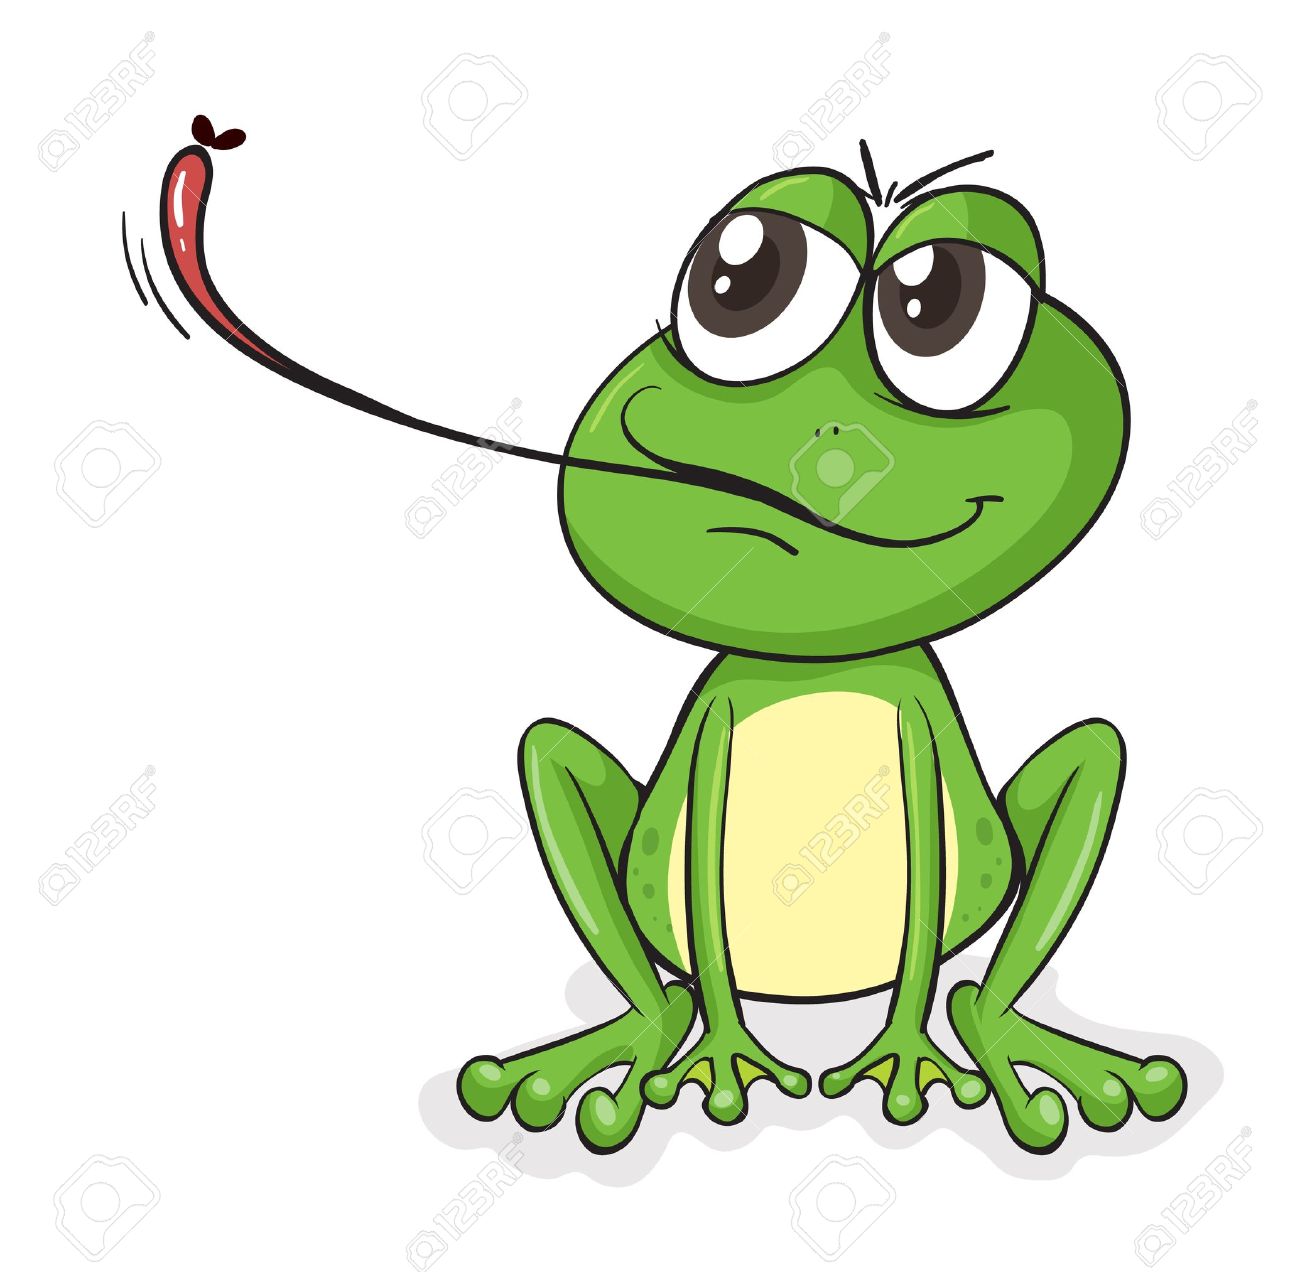 Frog tongue clipart.